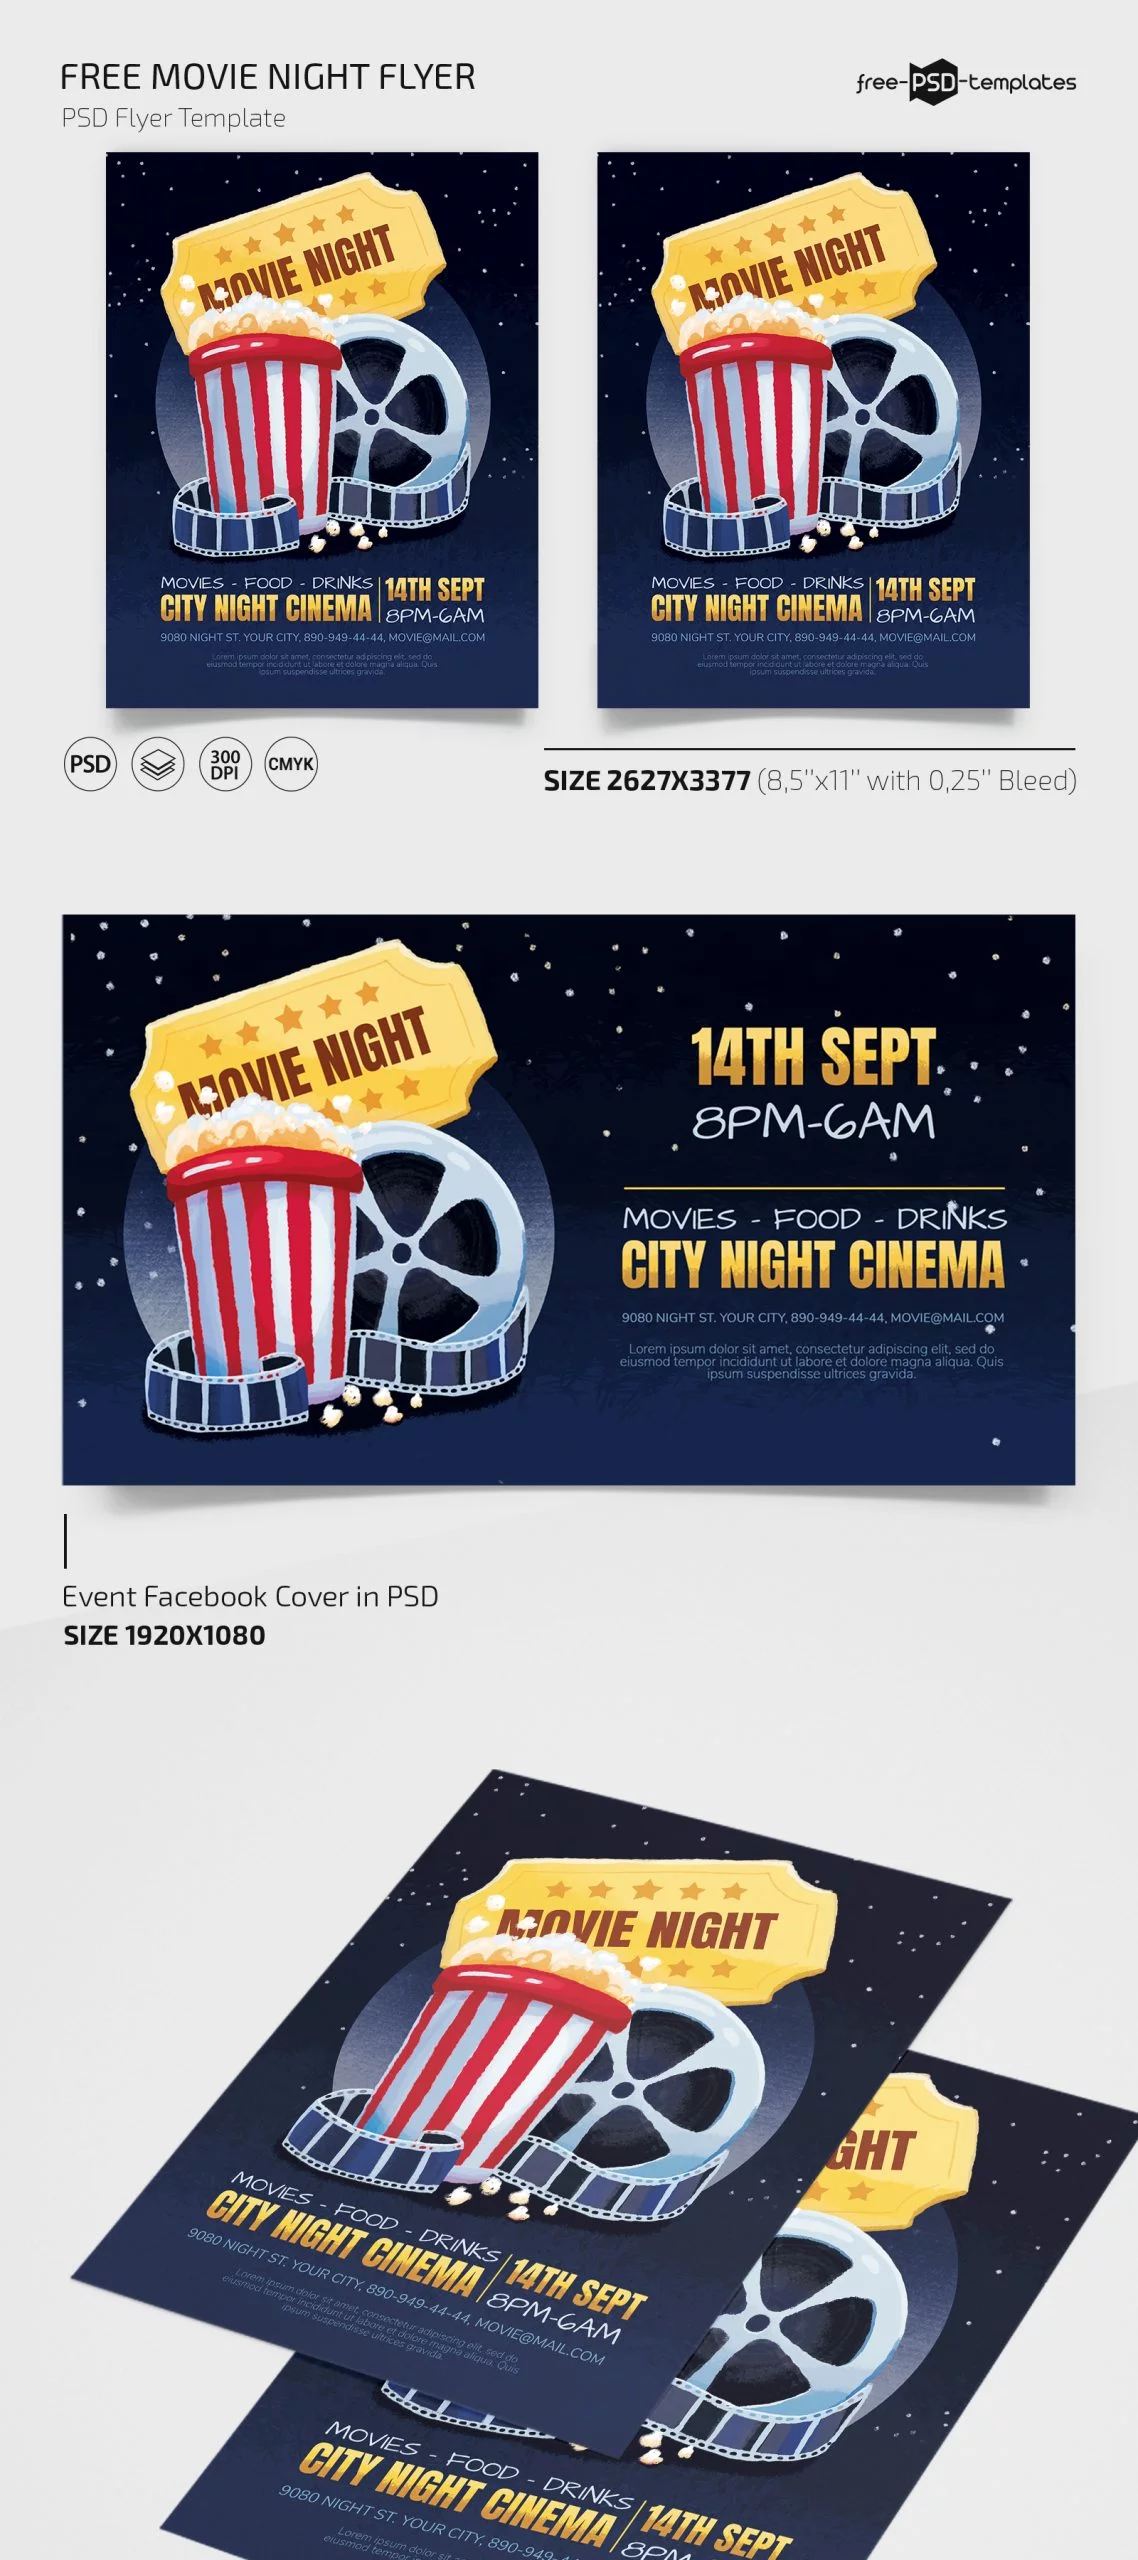 Free Movie Night Flyer in PSD